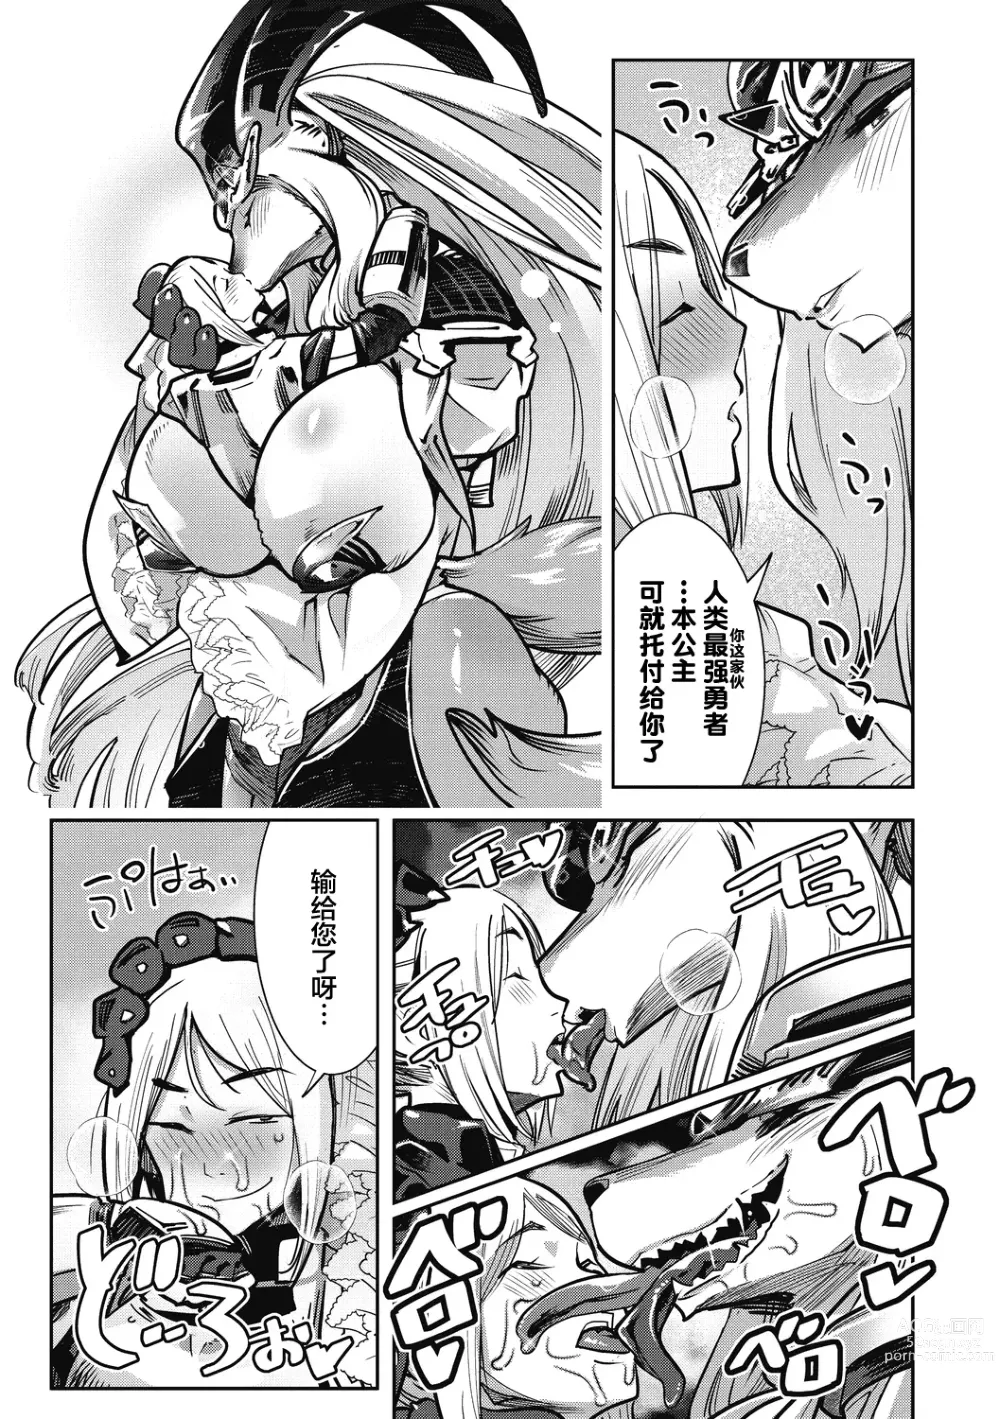 Page 8 of manga Yuusha ha Maou to Koi shitai Saishuuwa